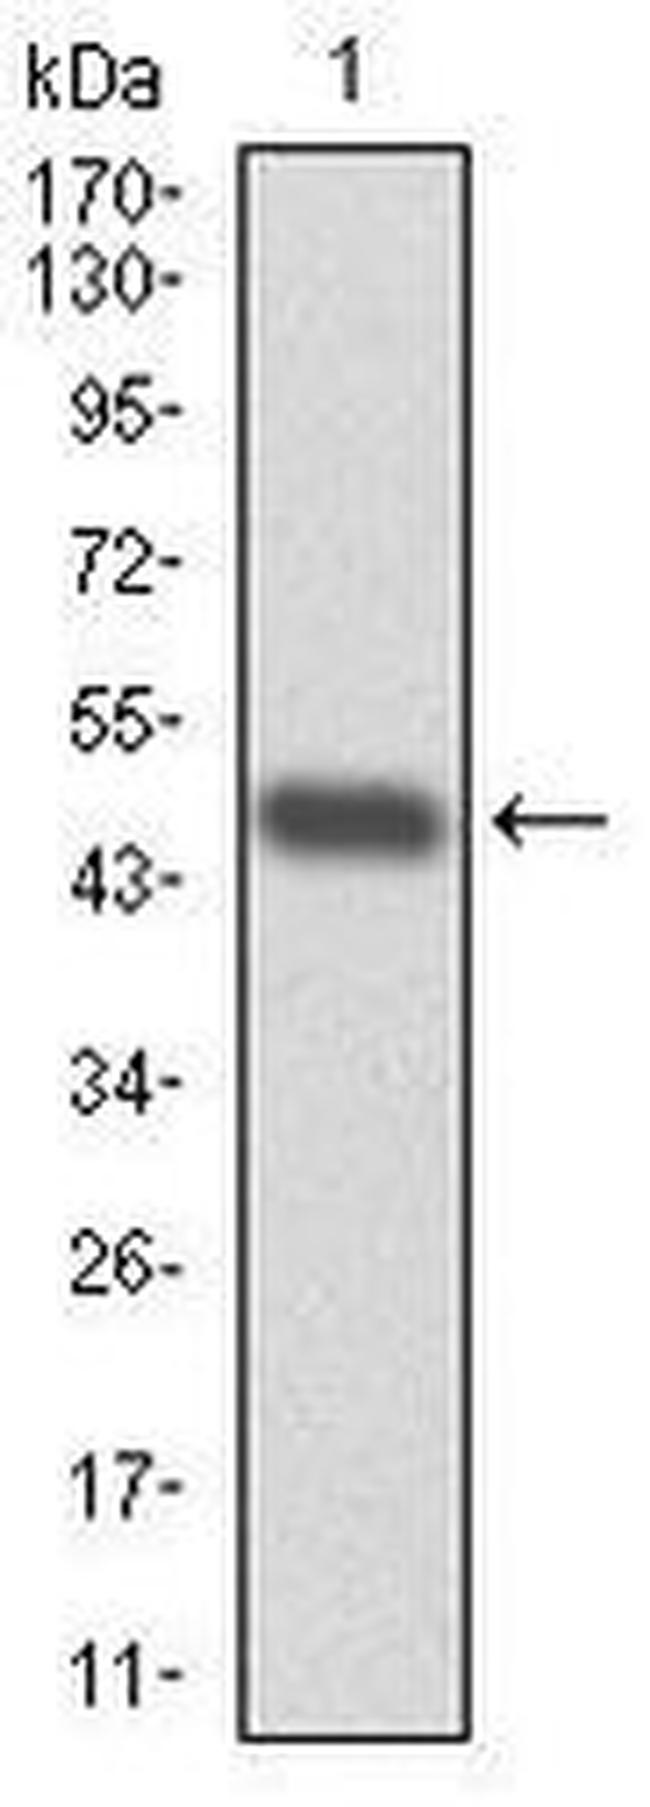 RPA70 Antibody in Western Blot (WB)